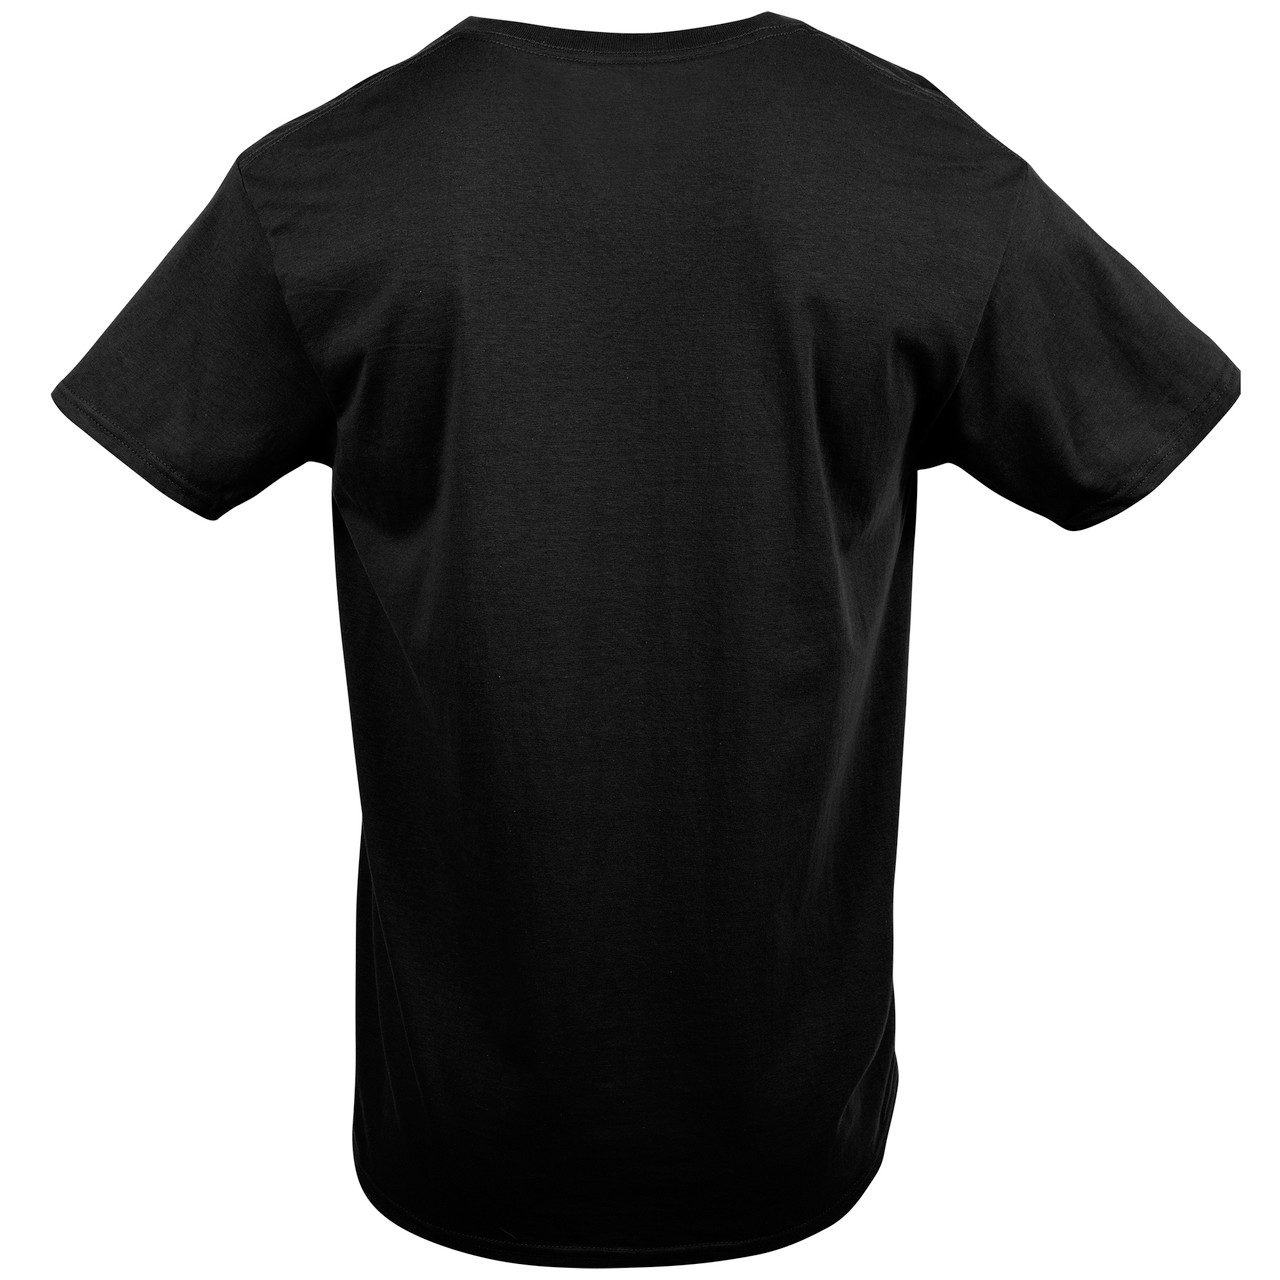 G1103PL | Men's Platinum V-Neck T-Shirt | Gildan Retail